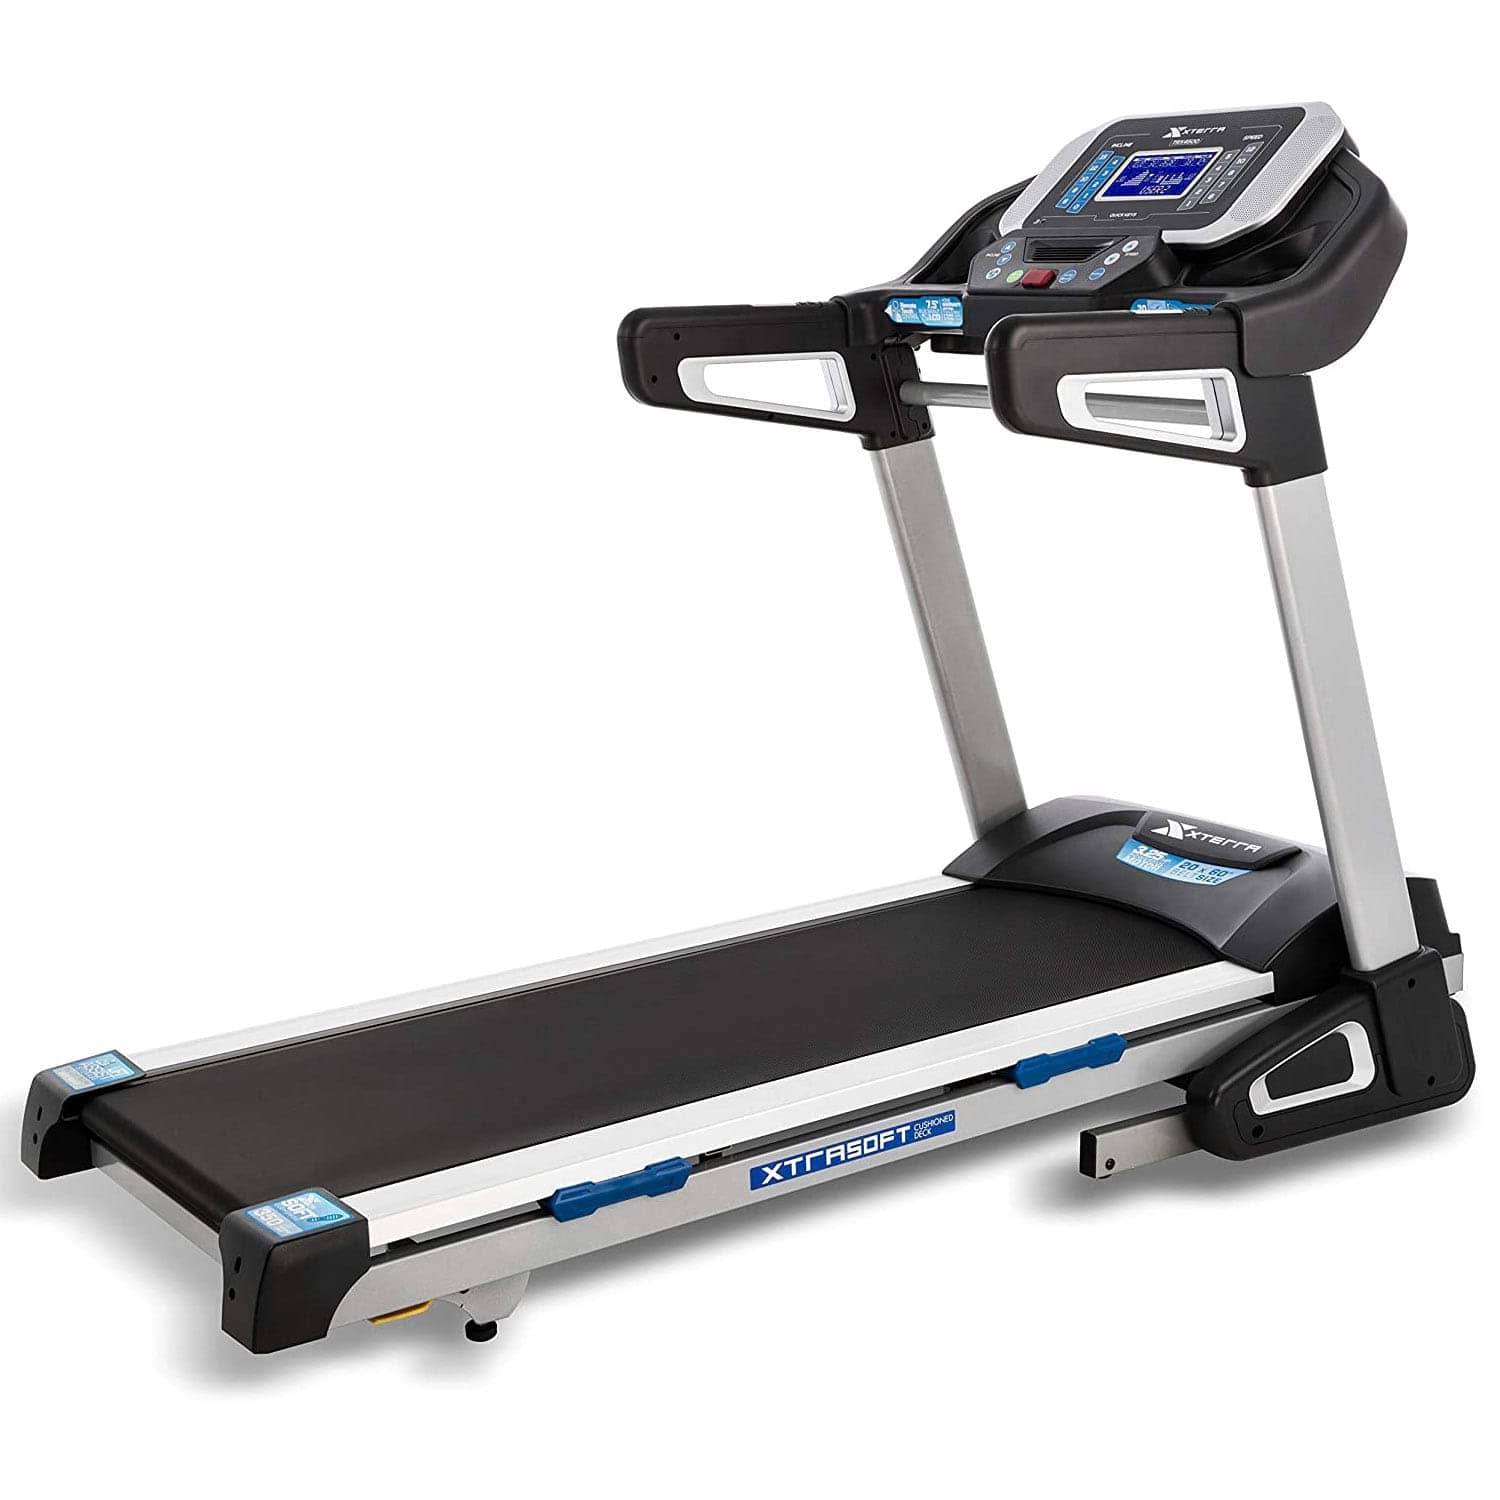 ARGT XTERRA Fitness TRX4500 Home Use Treadmill